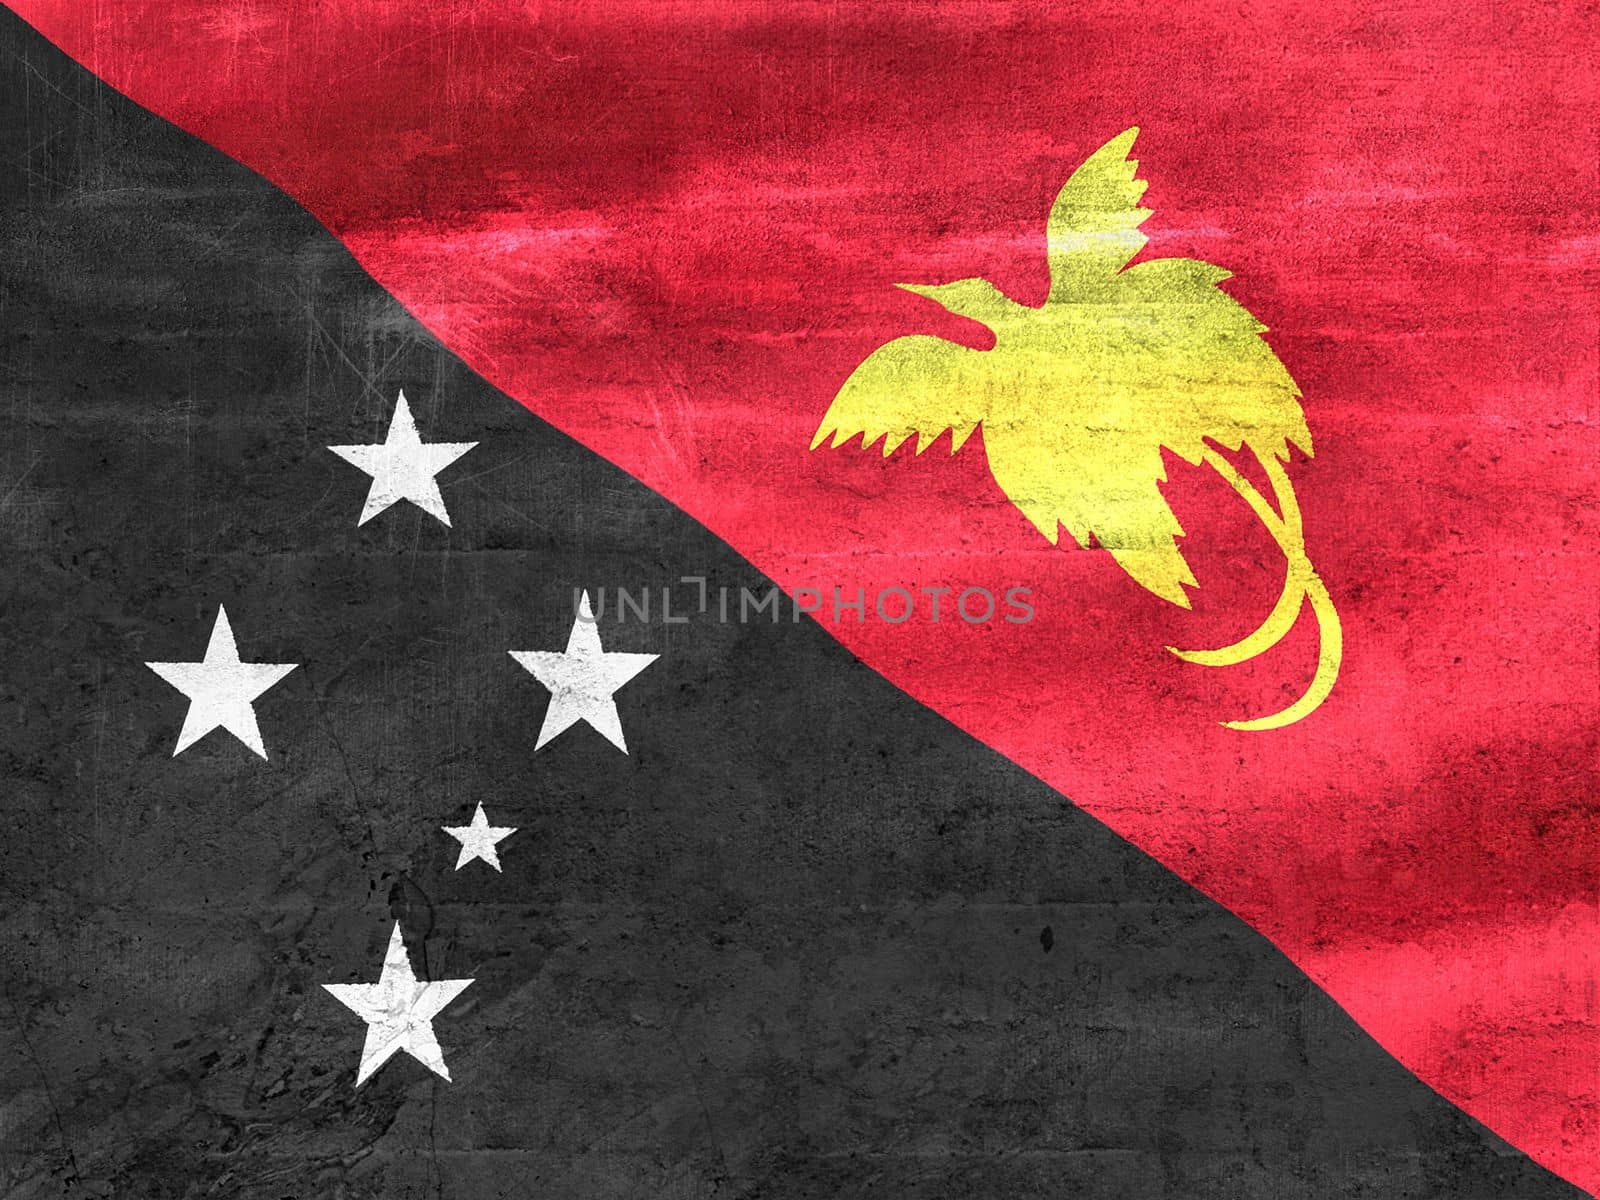 Papua New Guinea flag - realistic waving fabric flag